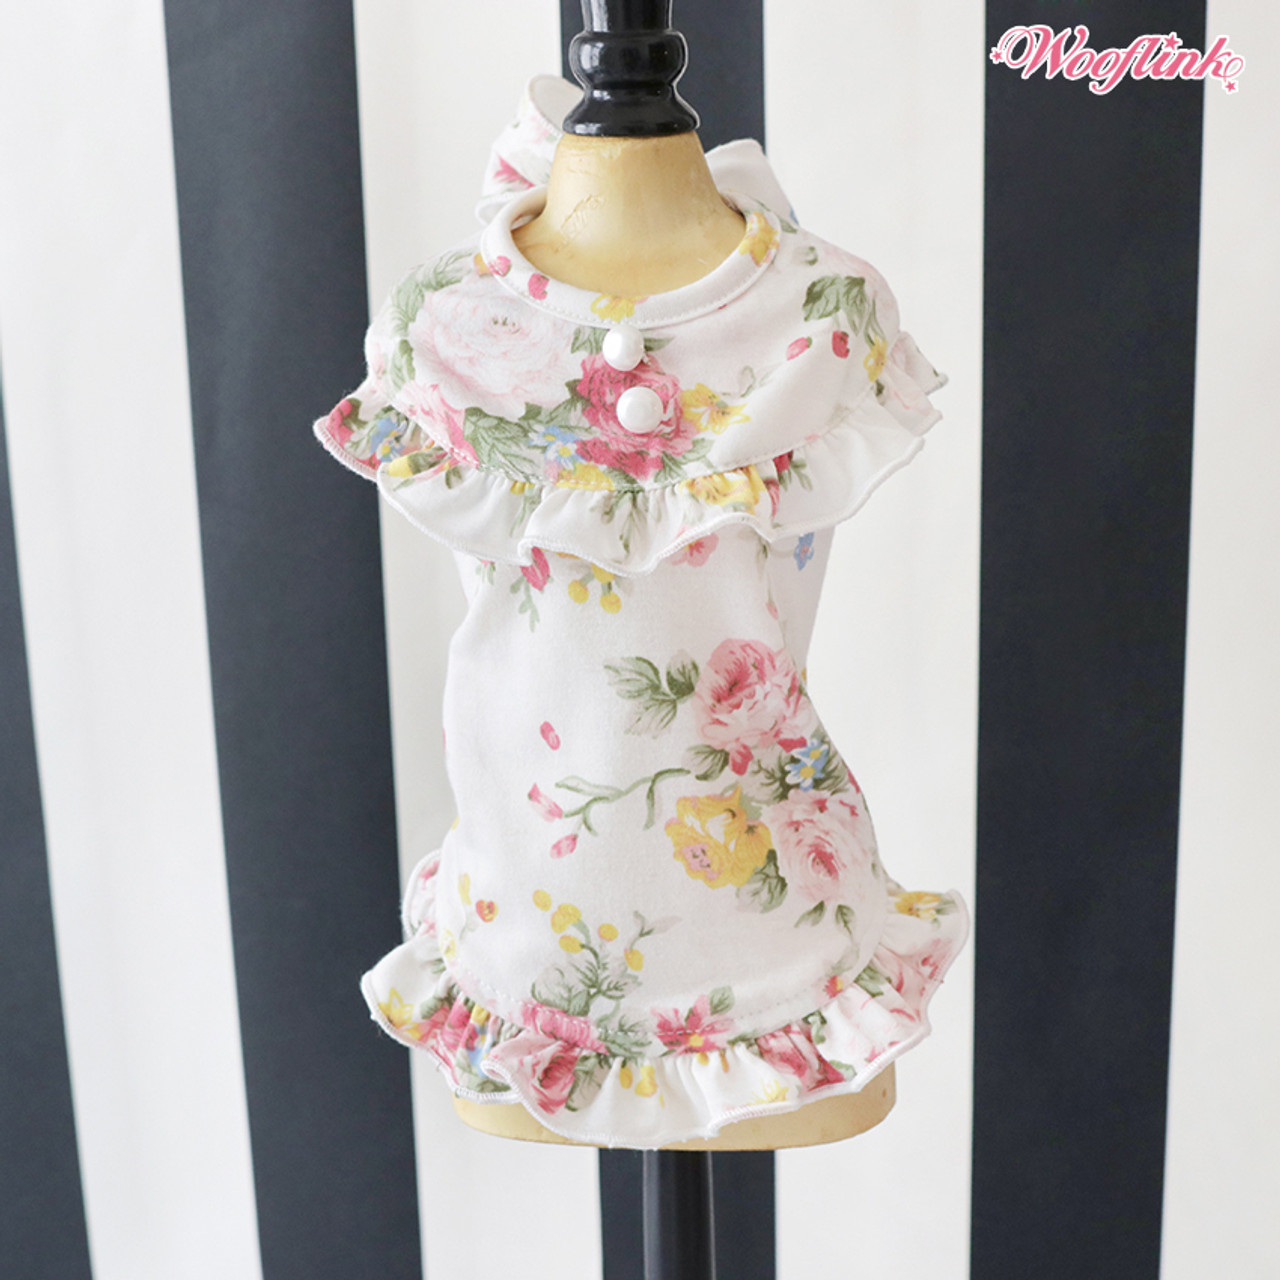 Wooflink Floral Mini Dress